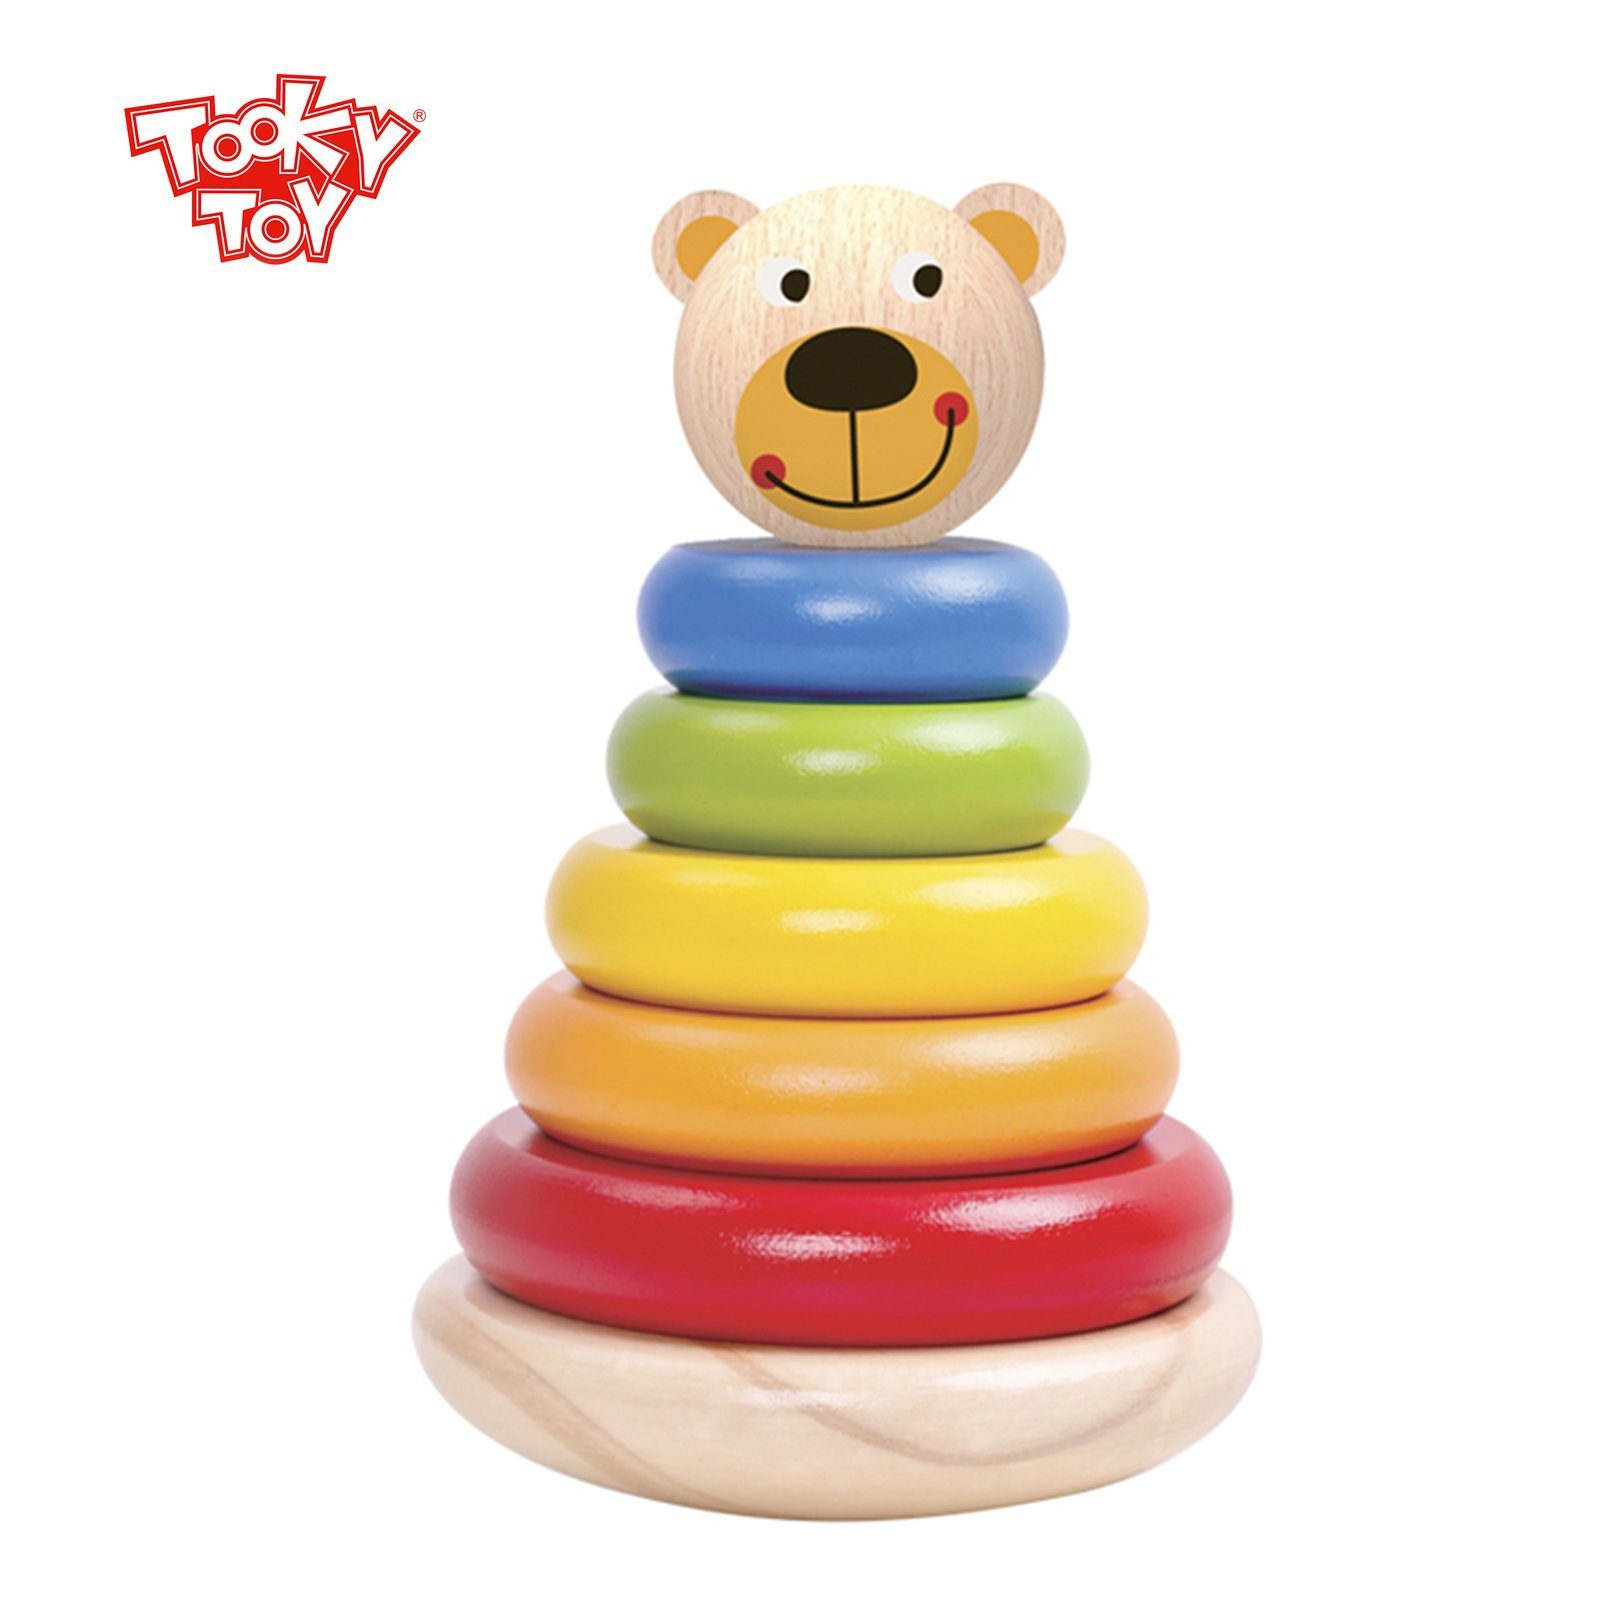 Tooky Toy Lernspielzeug Bär Wackelturm Balancierspiel Regenbogen-Stapelbausteine), Stapelspielzeug aus Holz Holzspielzeug (Set